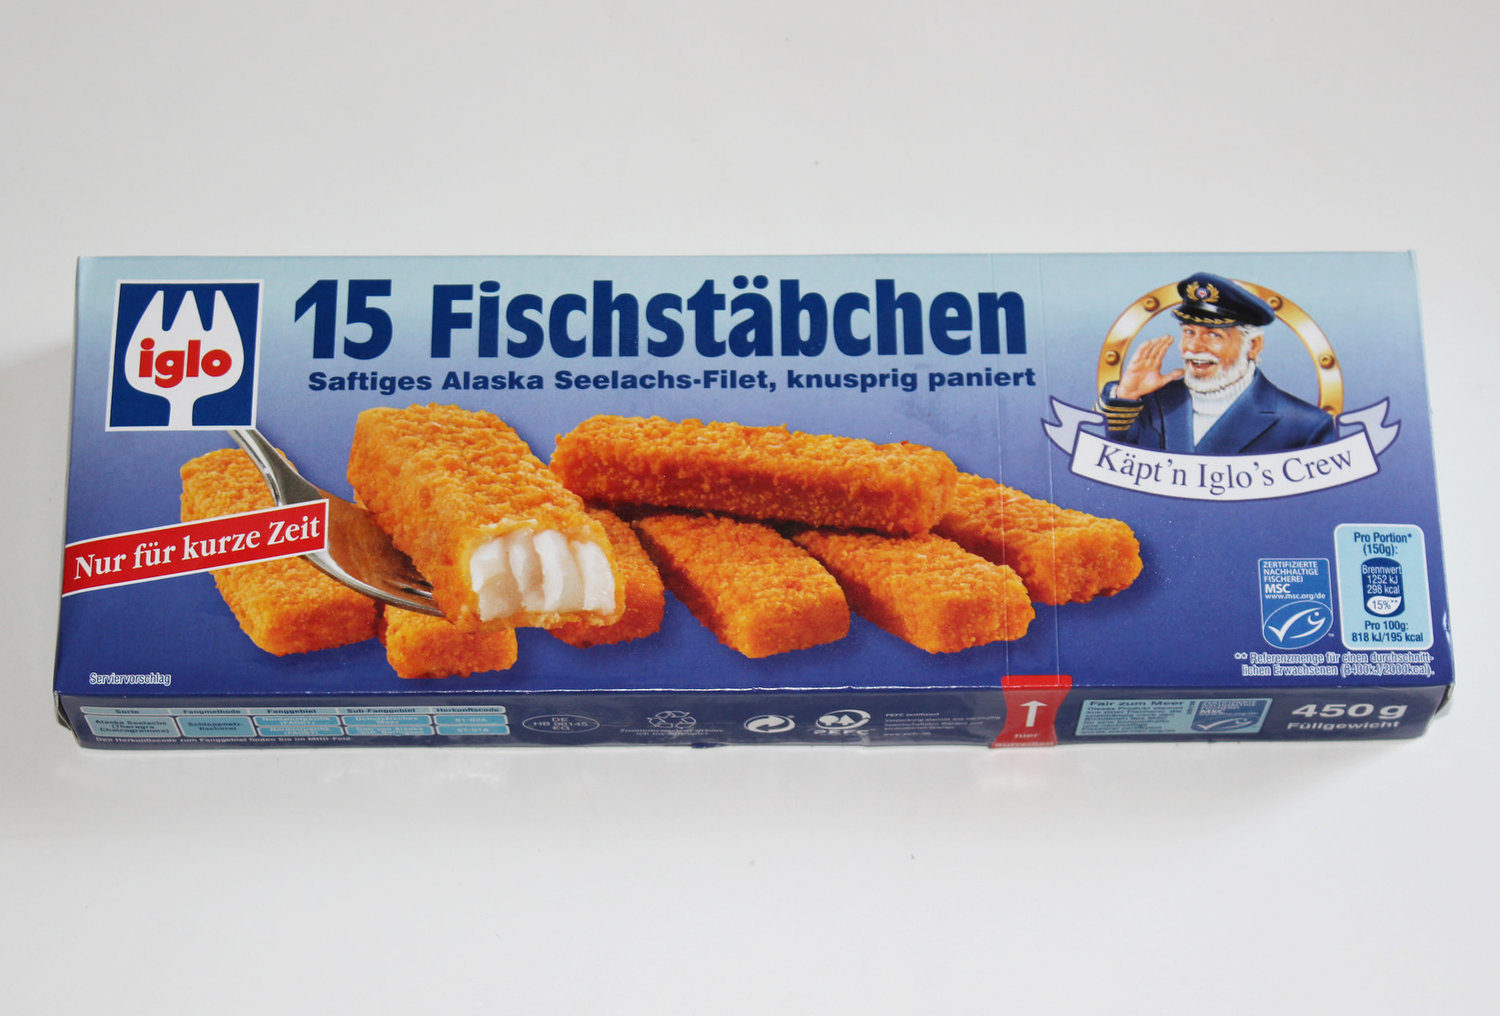 Fish products czech republic